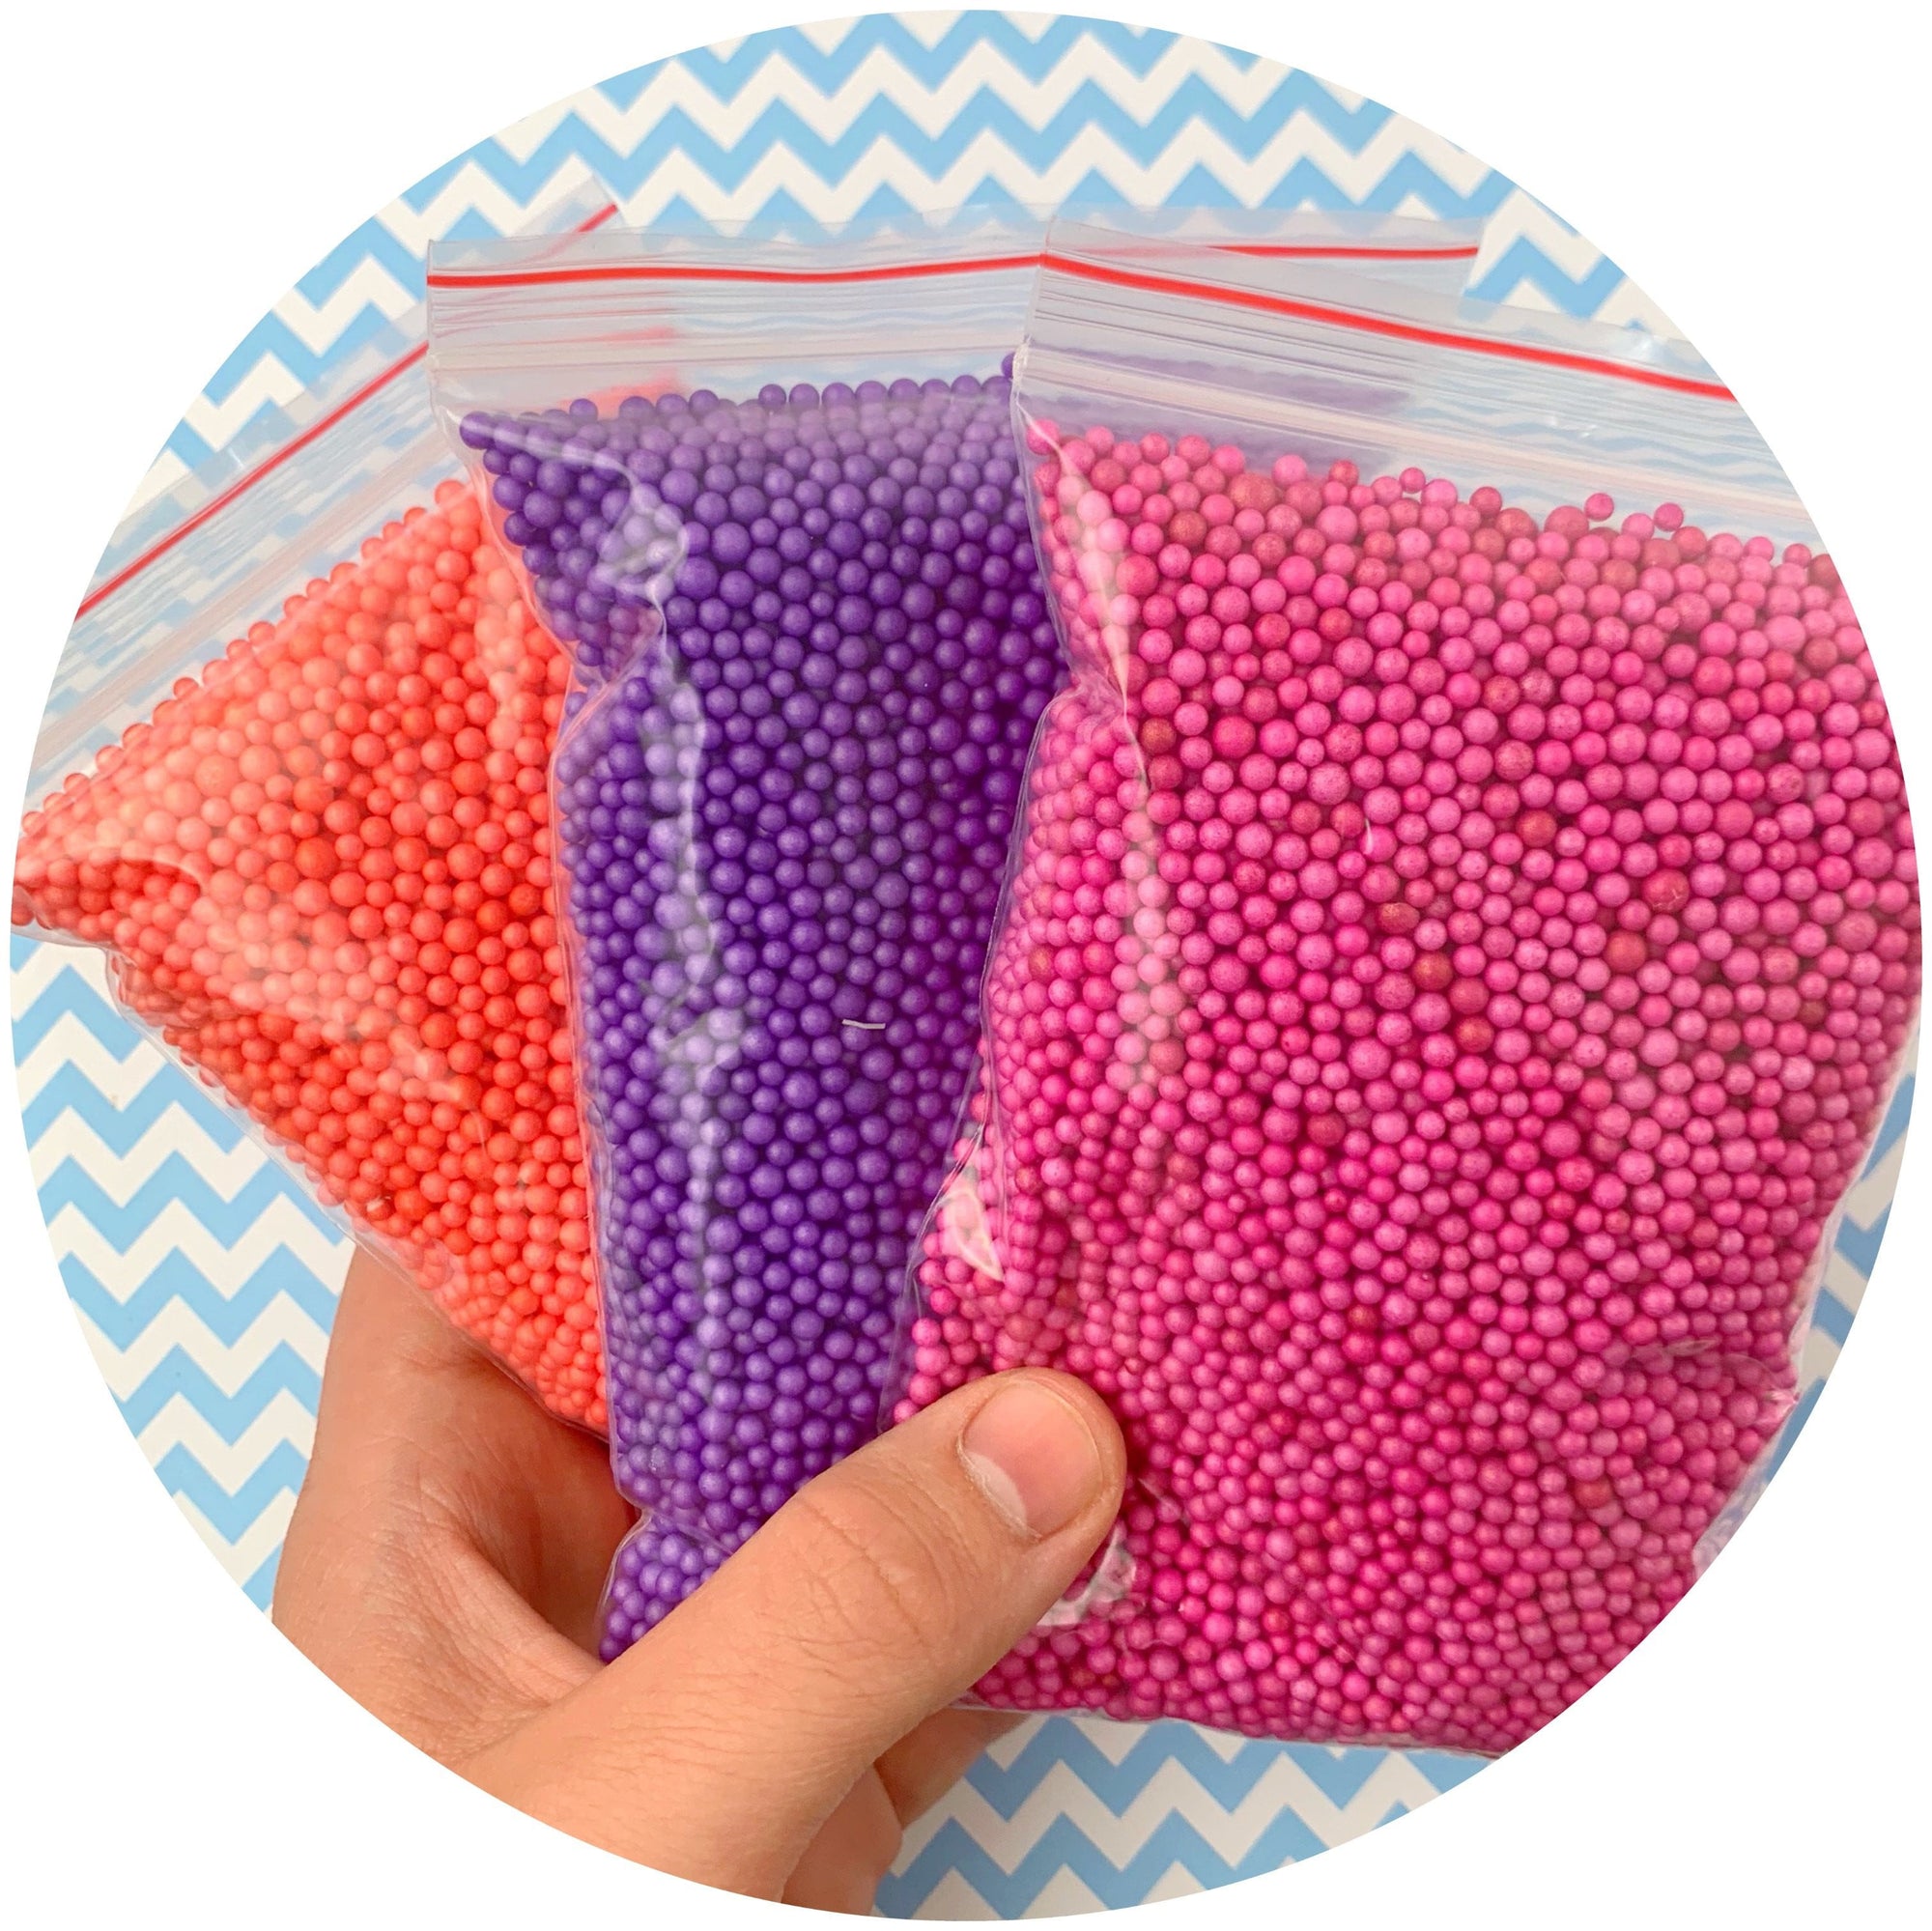 Particle multicolor foam beads slime supplies Decorative Foam Balls for  Slime bead about 2-3mm diameter 5 grams/bag 1 bag